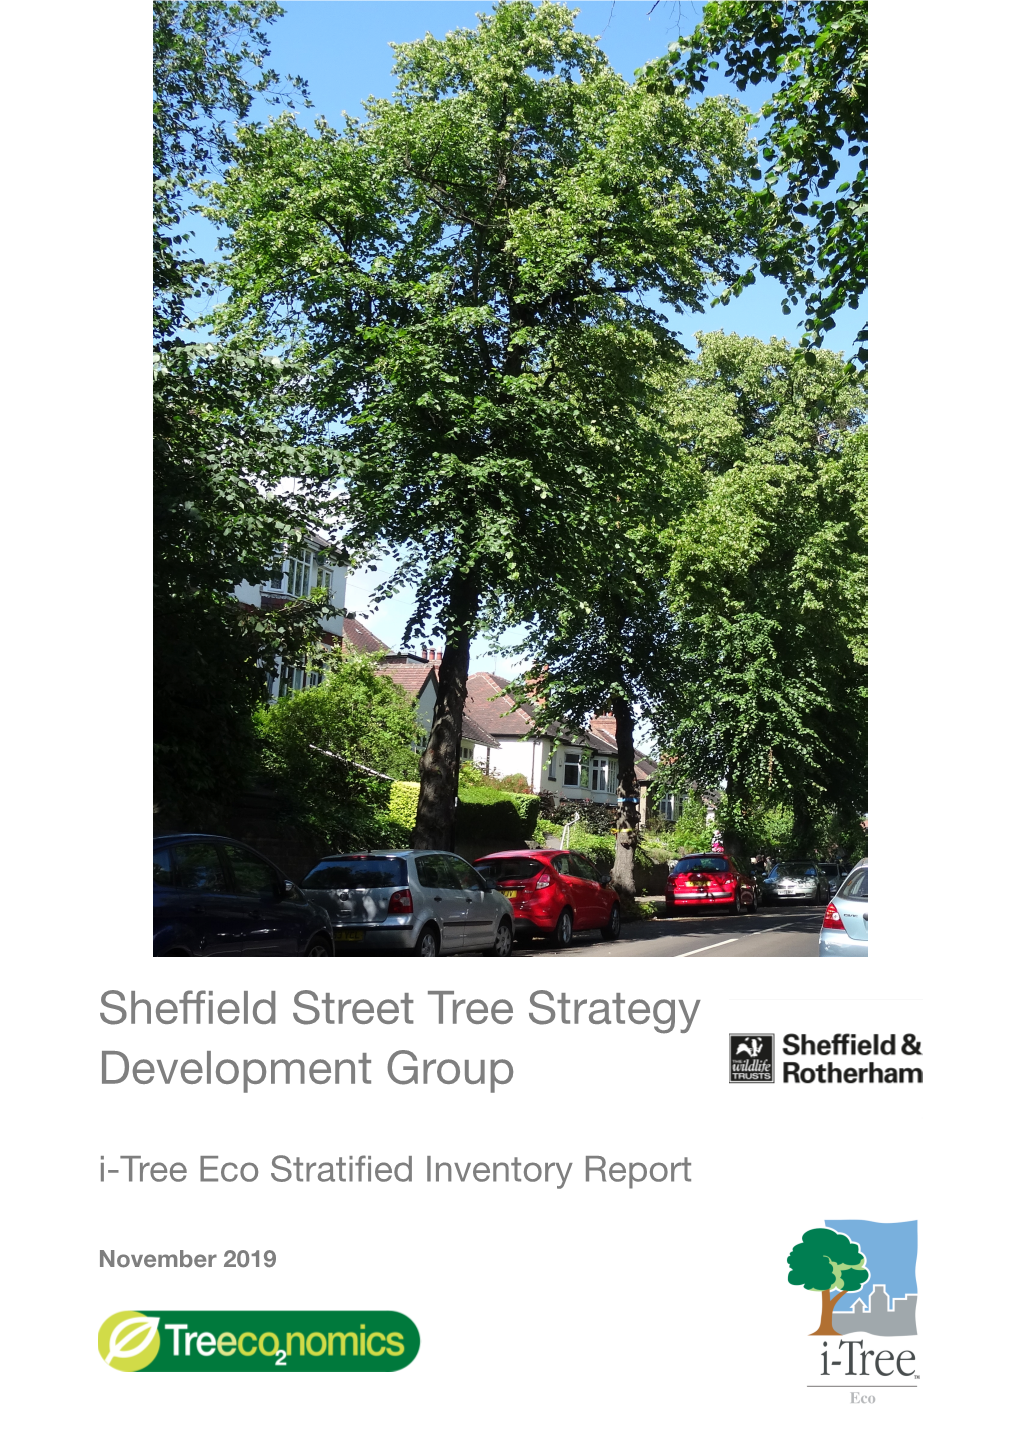 Sheffield Street Tree Strategy Development Group